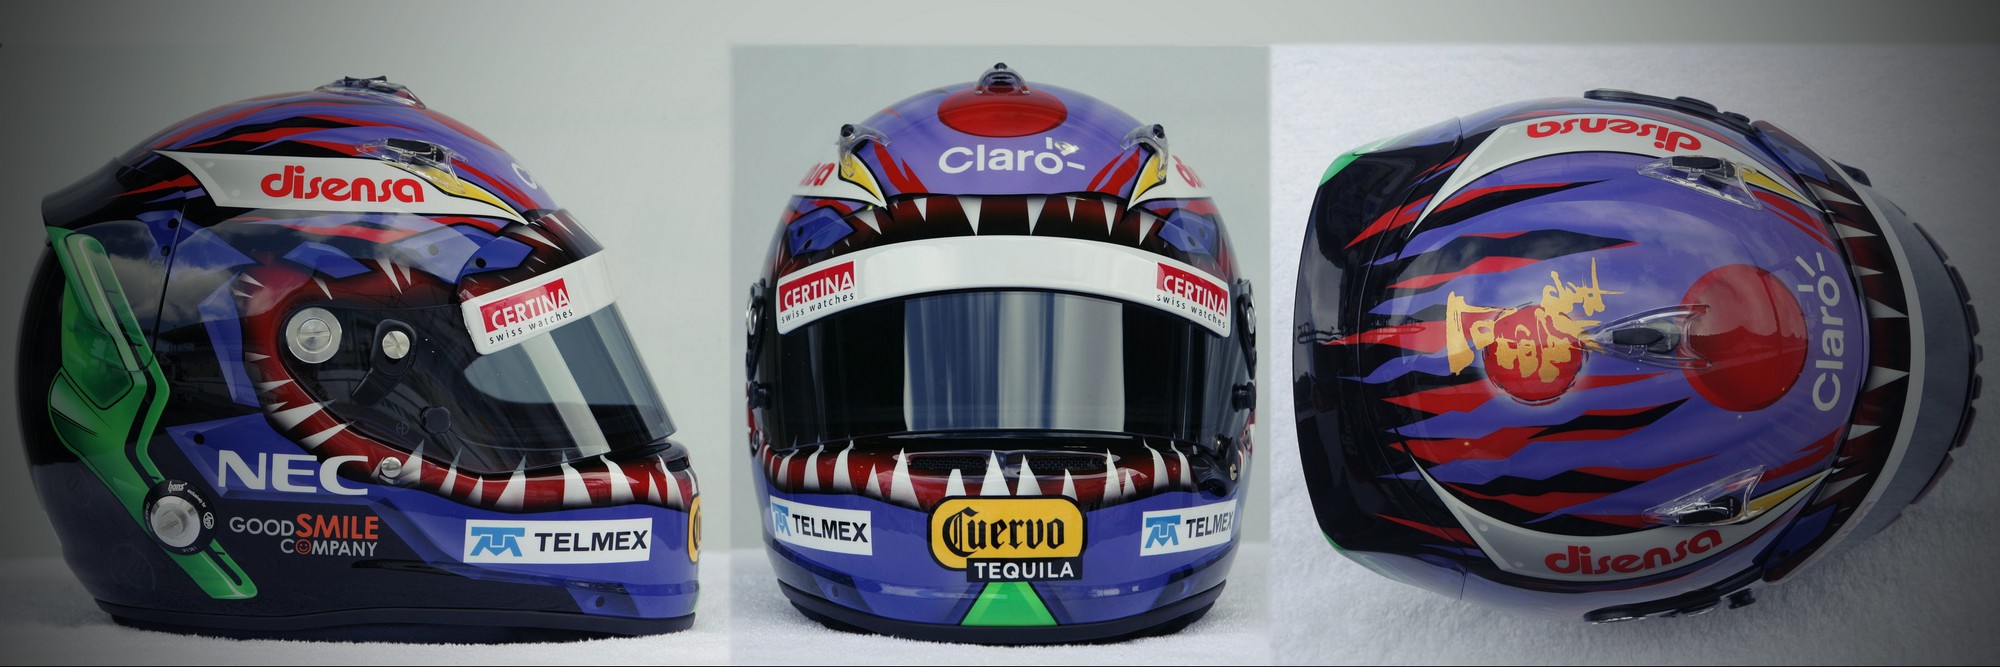 Шлем Камуи Кобаяши на Гран-При Бразилии 2011 года | 2011 Brazilian Grand Prix helmet of Kamui Kobayashi